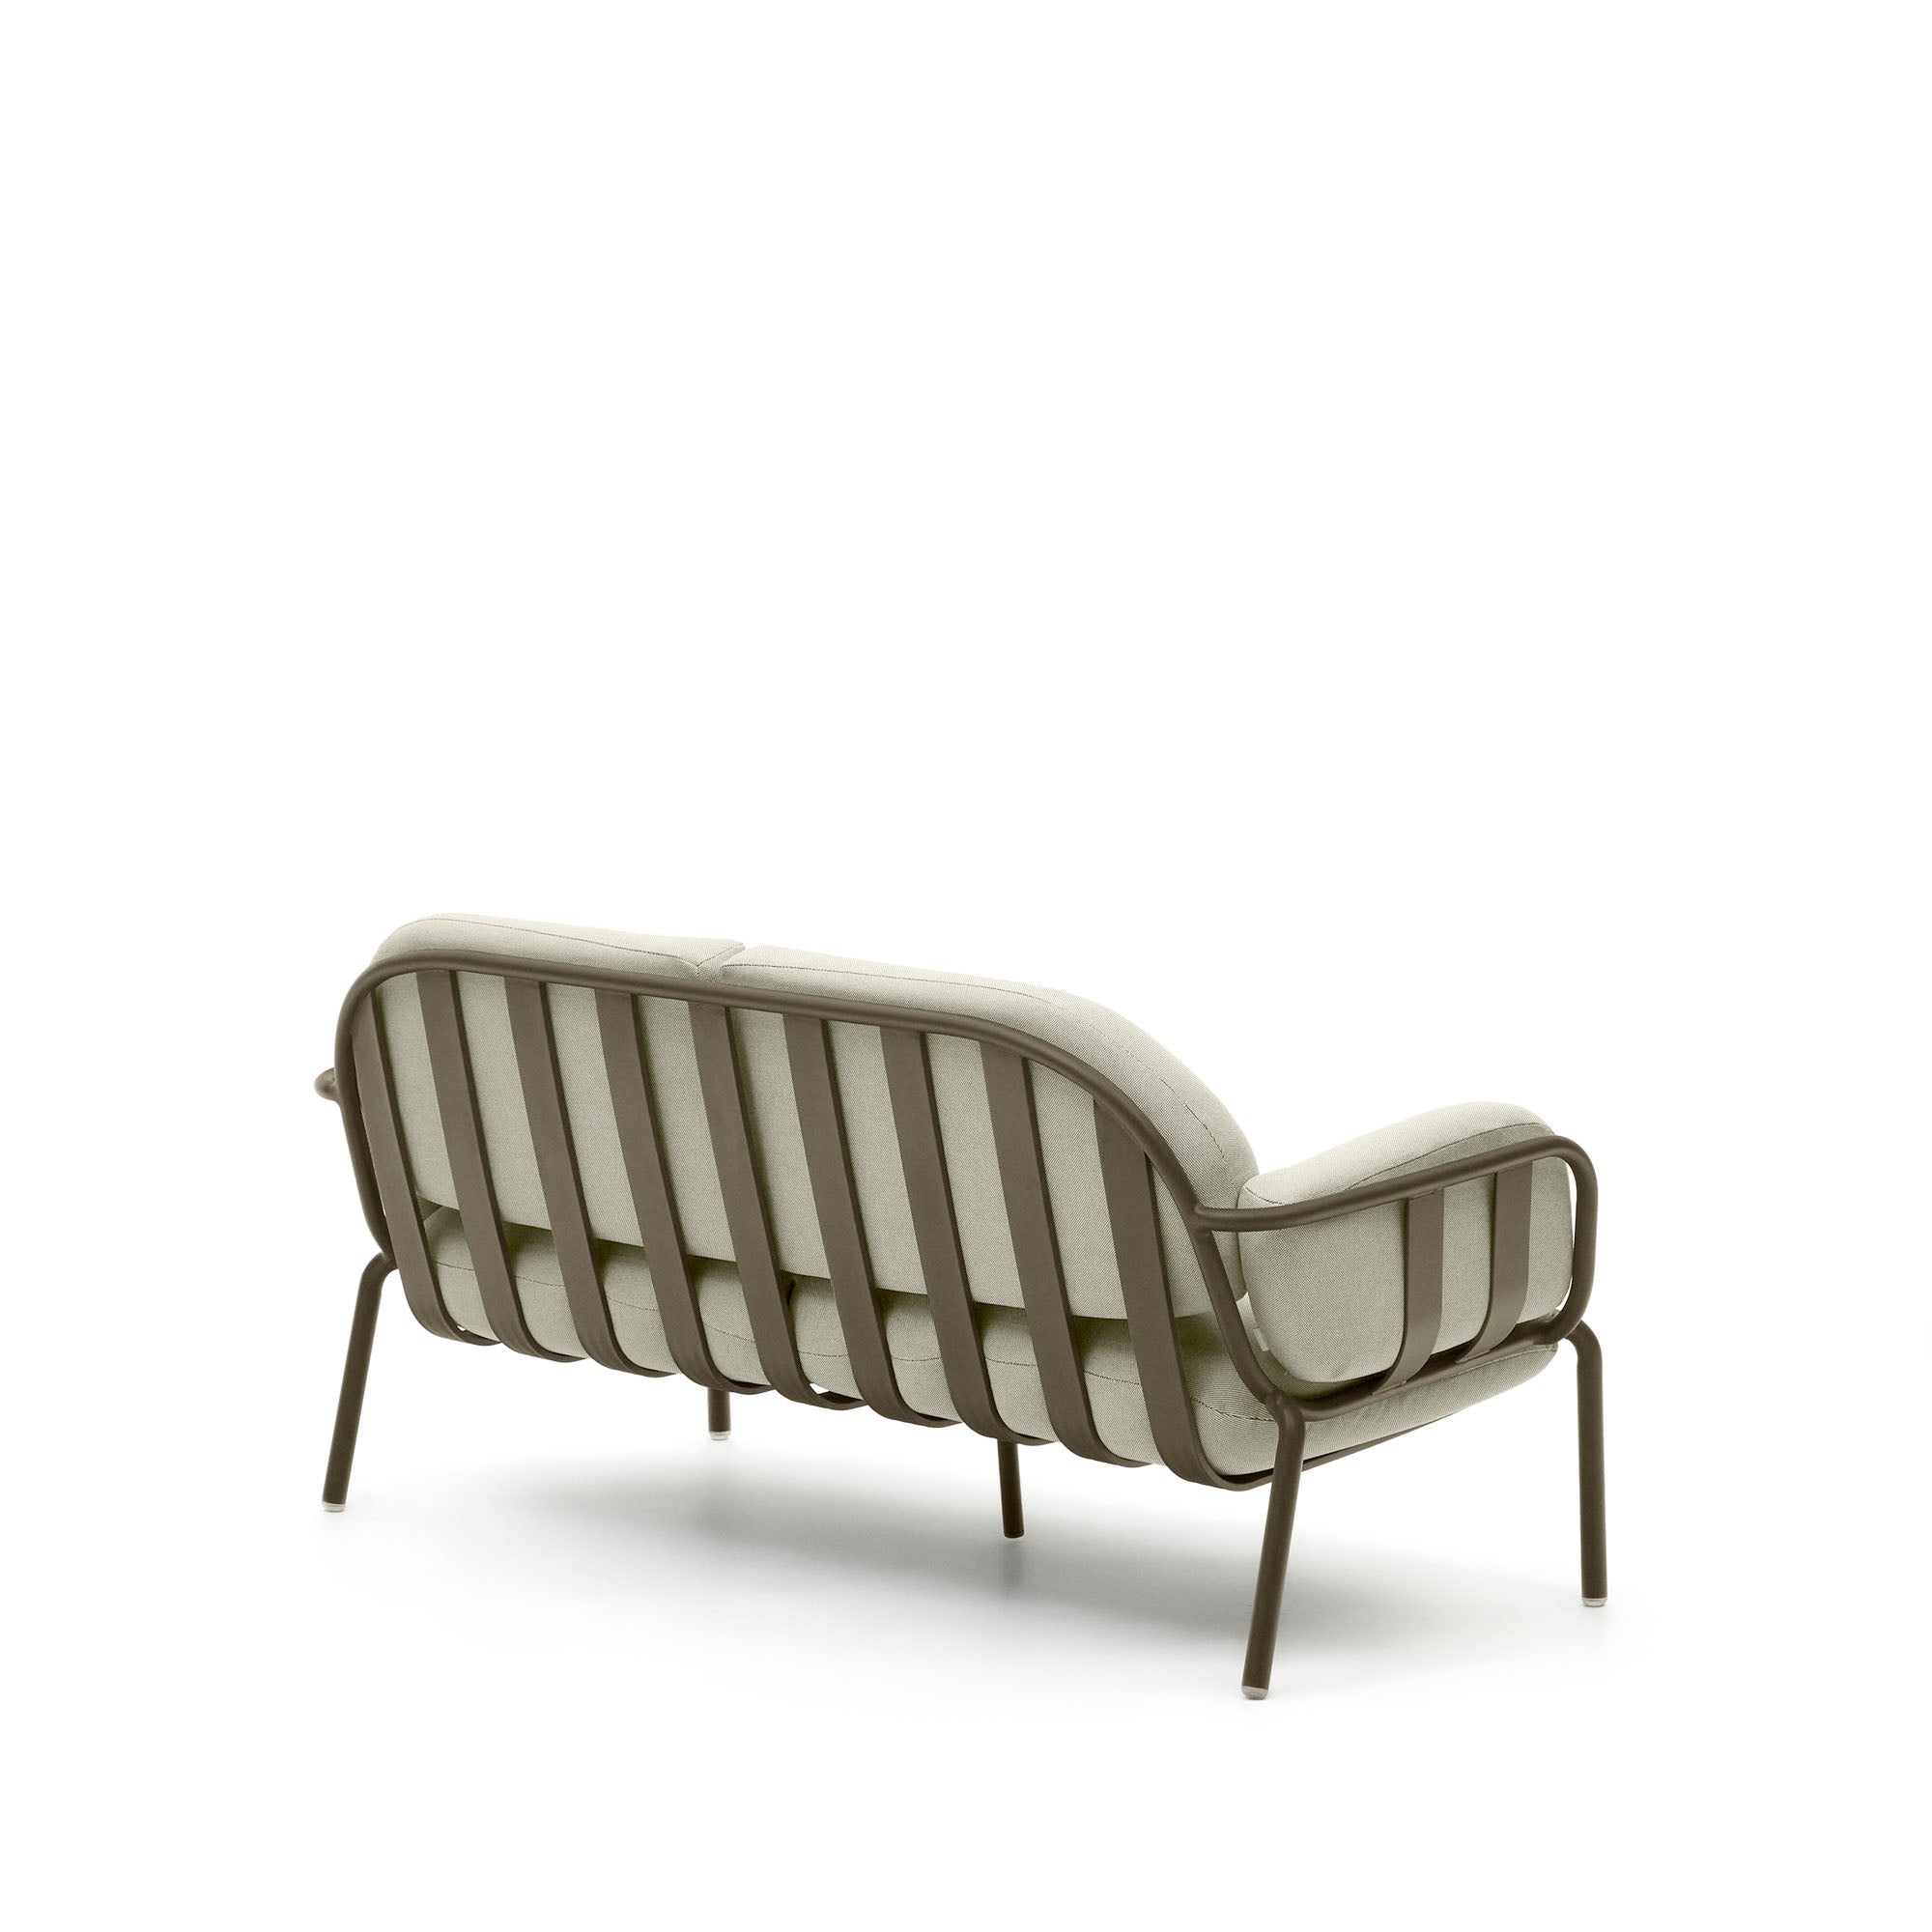 Joncols outdoor aluminium 2 seater sofa with powder coated green finish, 165 cm